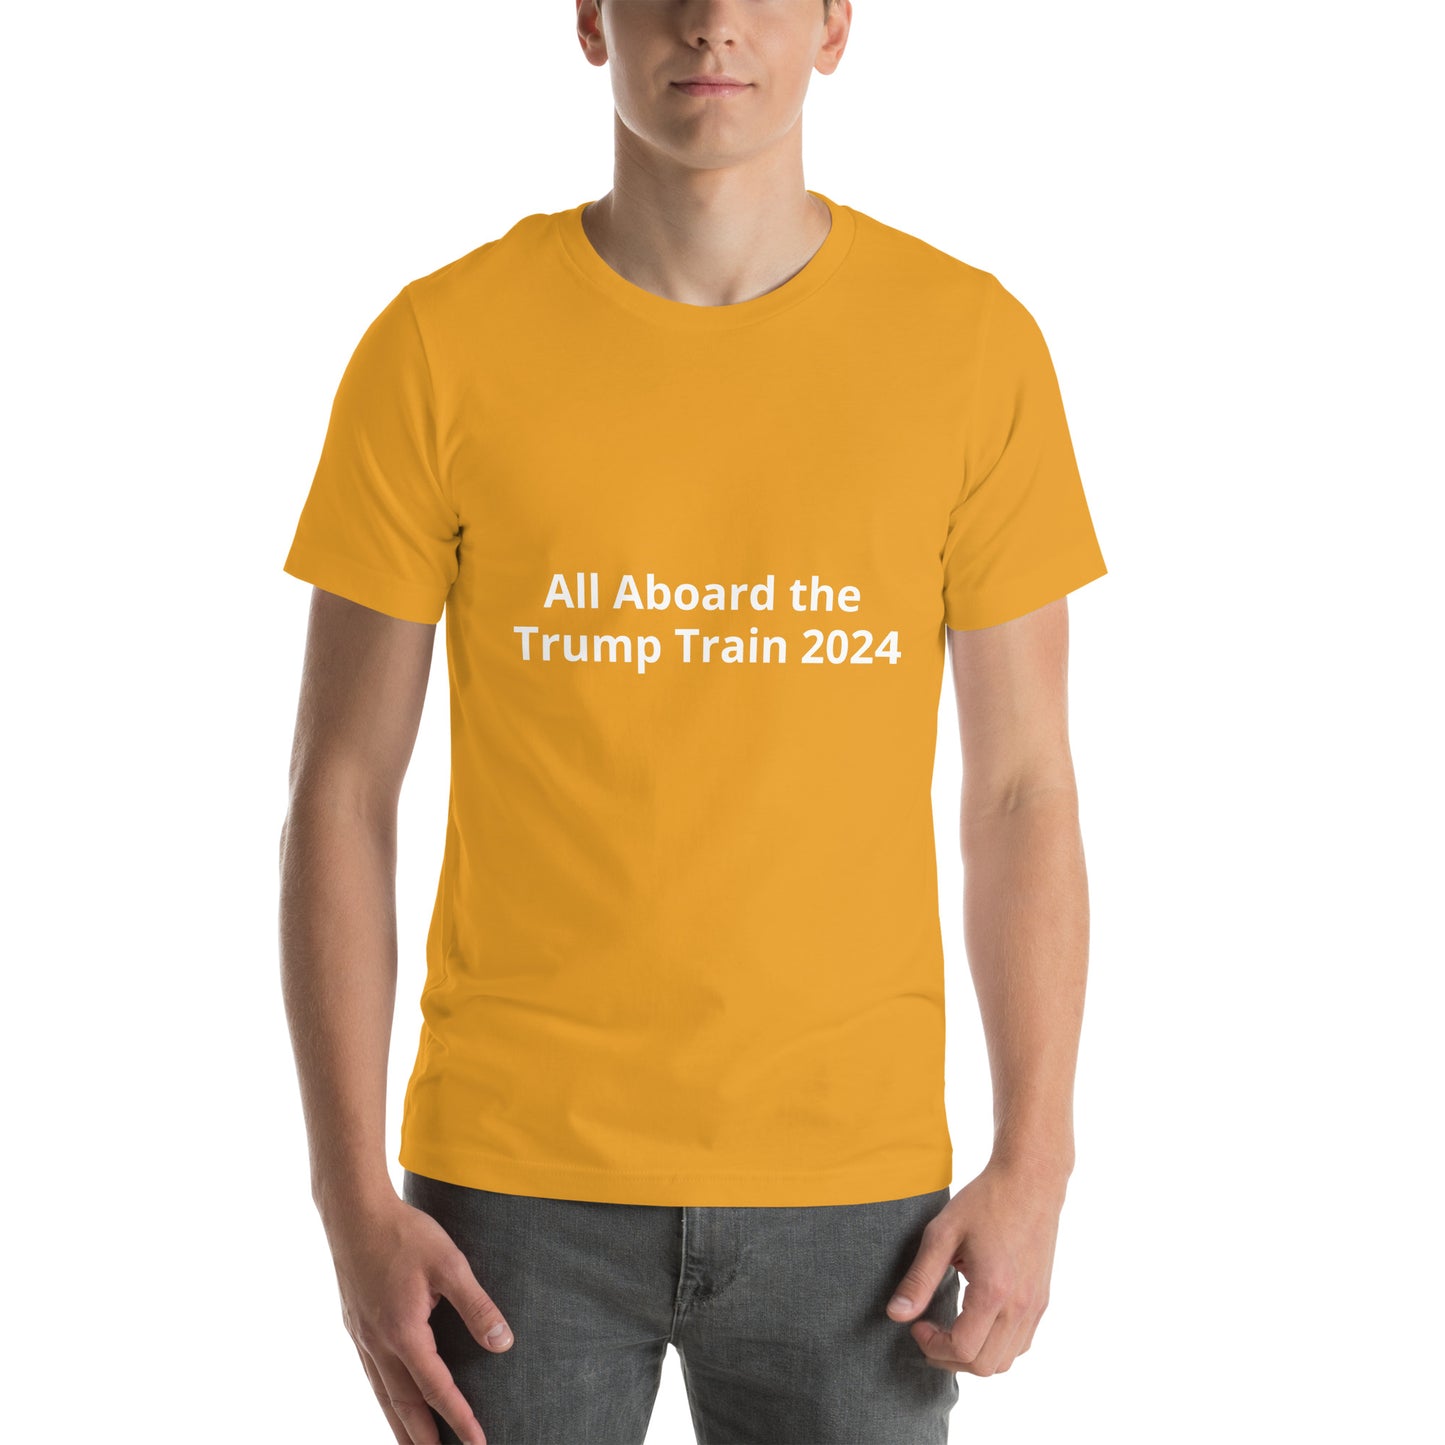 All Aboard the Trump Train 2024 Unisex t-shirt